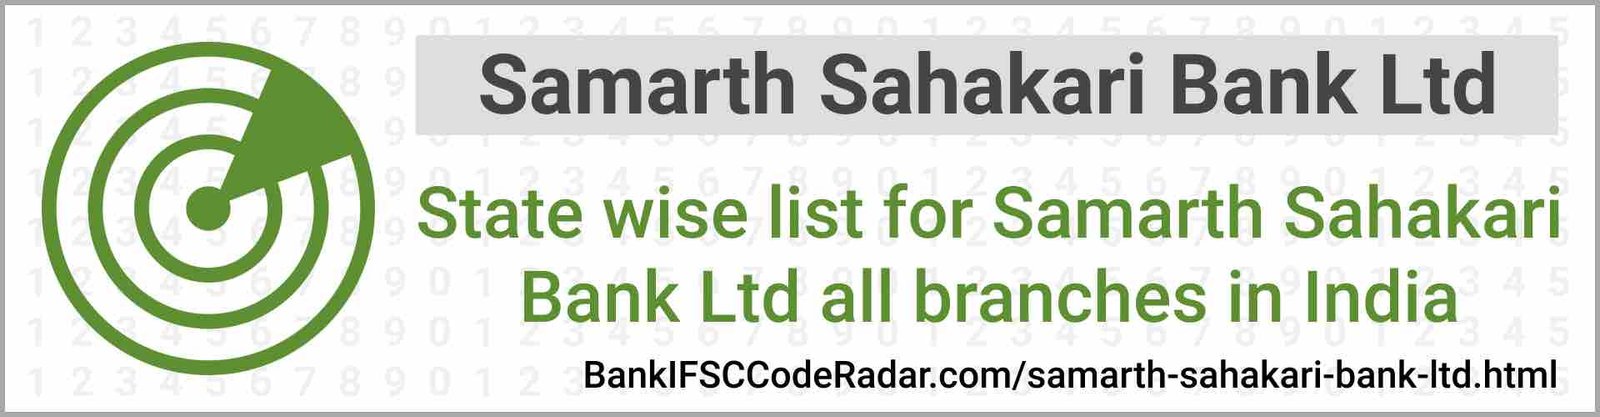 Samarth Sahakari Bank Ltd All Branches India